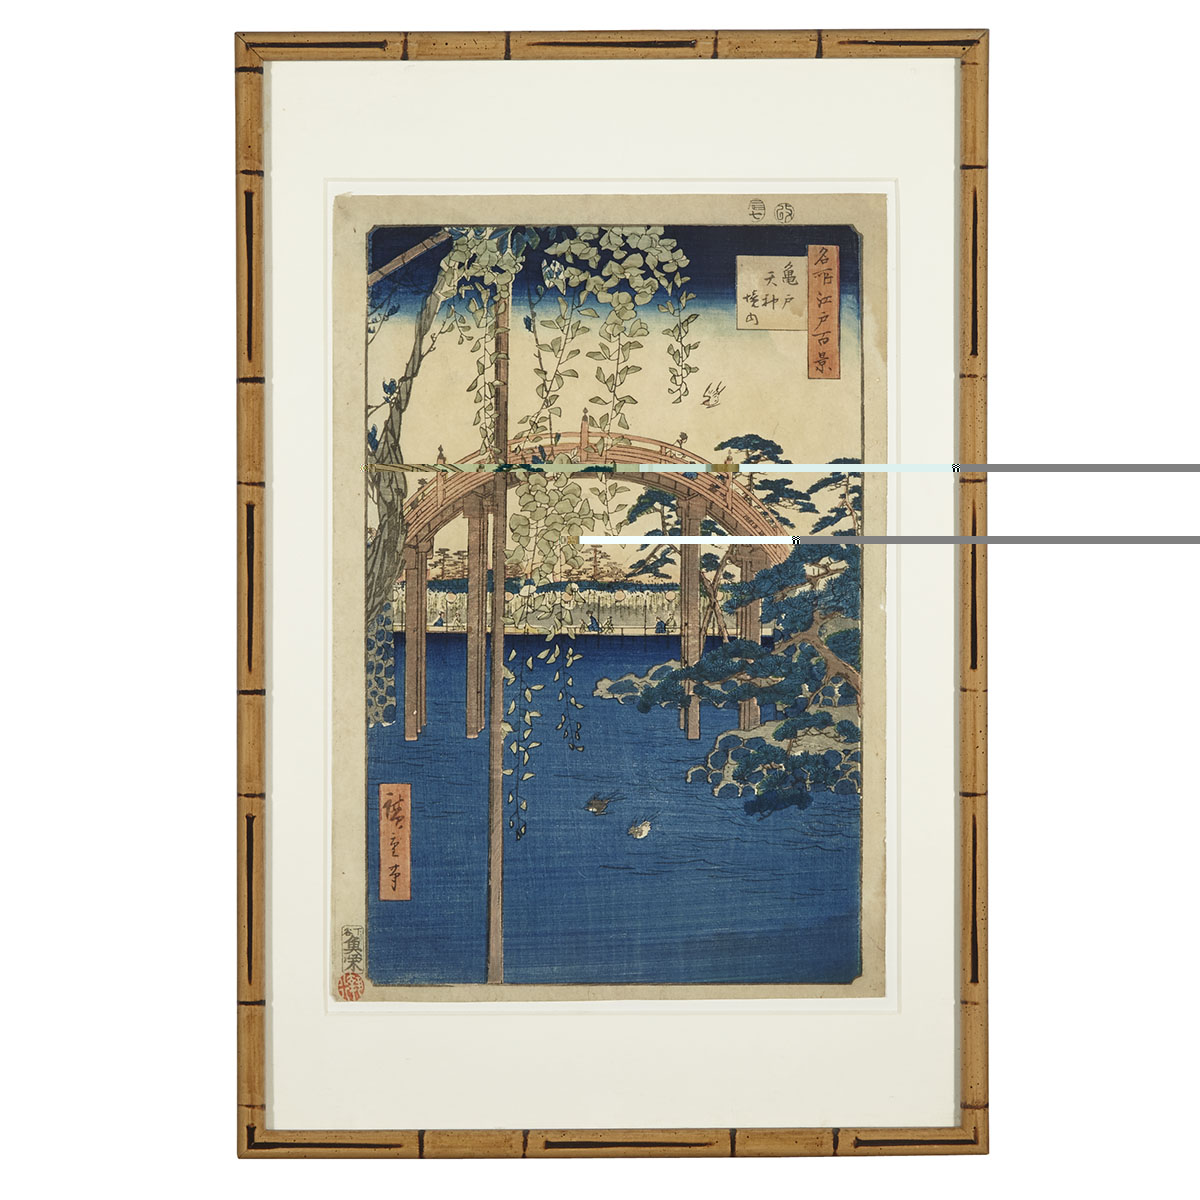 Utagawa Hiroshige (1797-1858), Edo Period